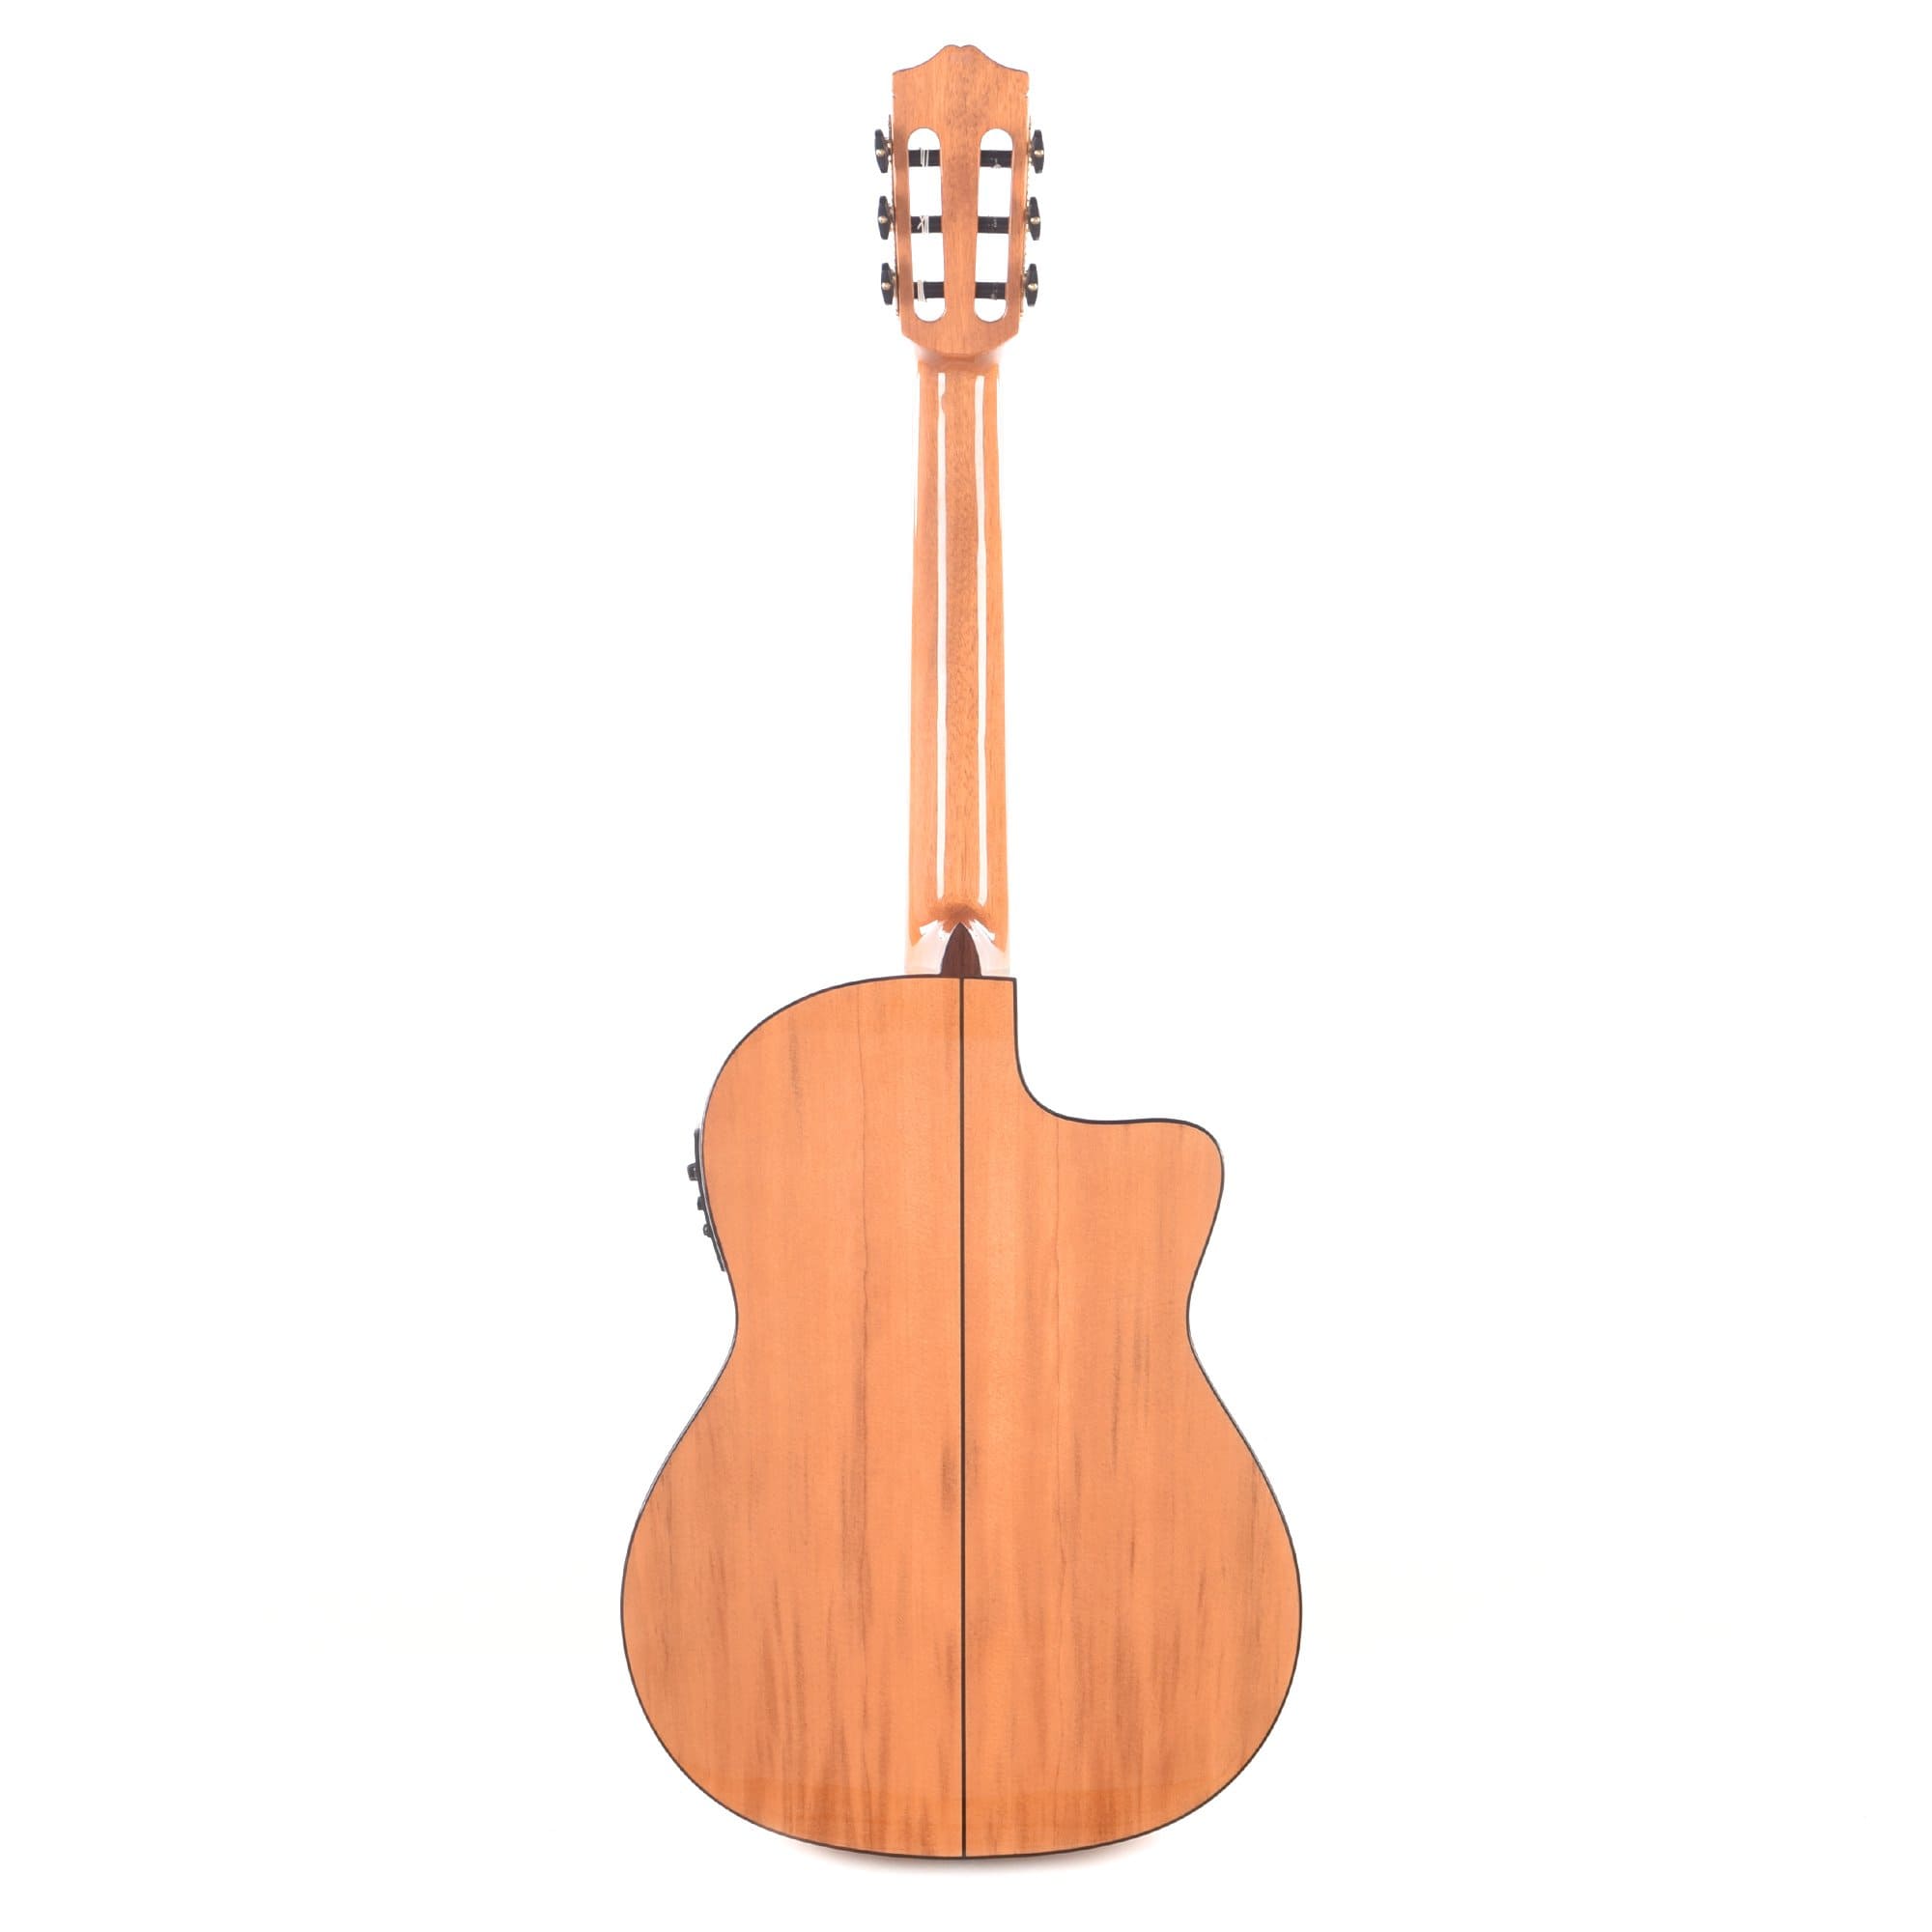 Cordoba Iberia Series GK Studio Gypsy Kings Signature Model LEFTY Acoustic Guitars / Classical